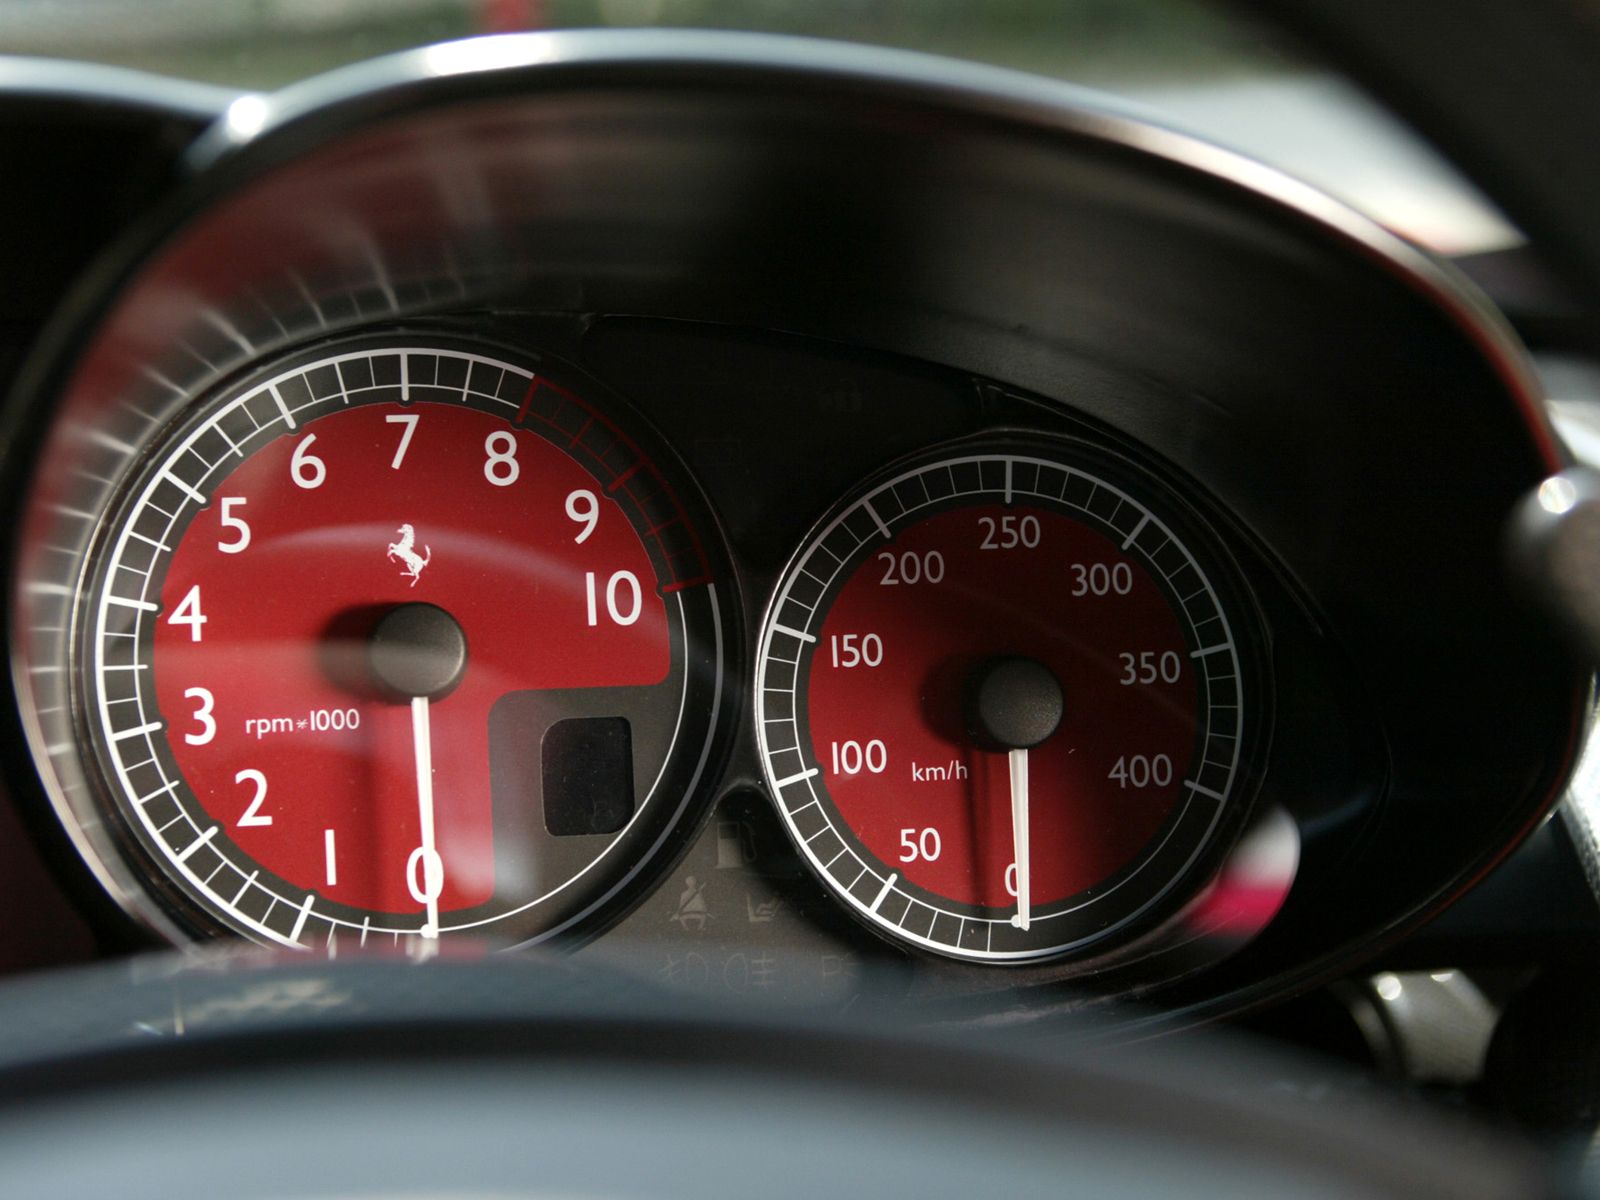 Ferrari Enzo speedometer